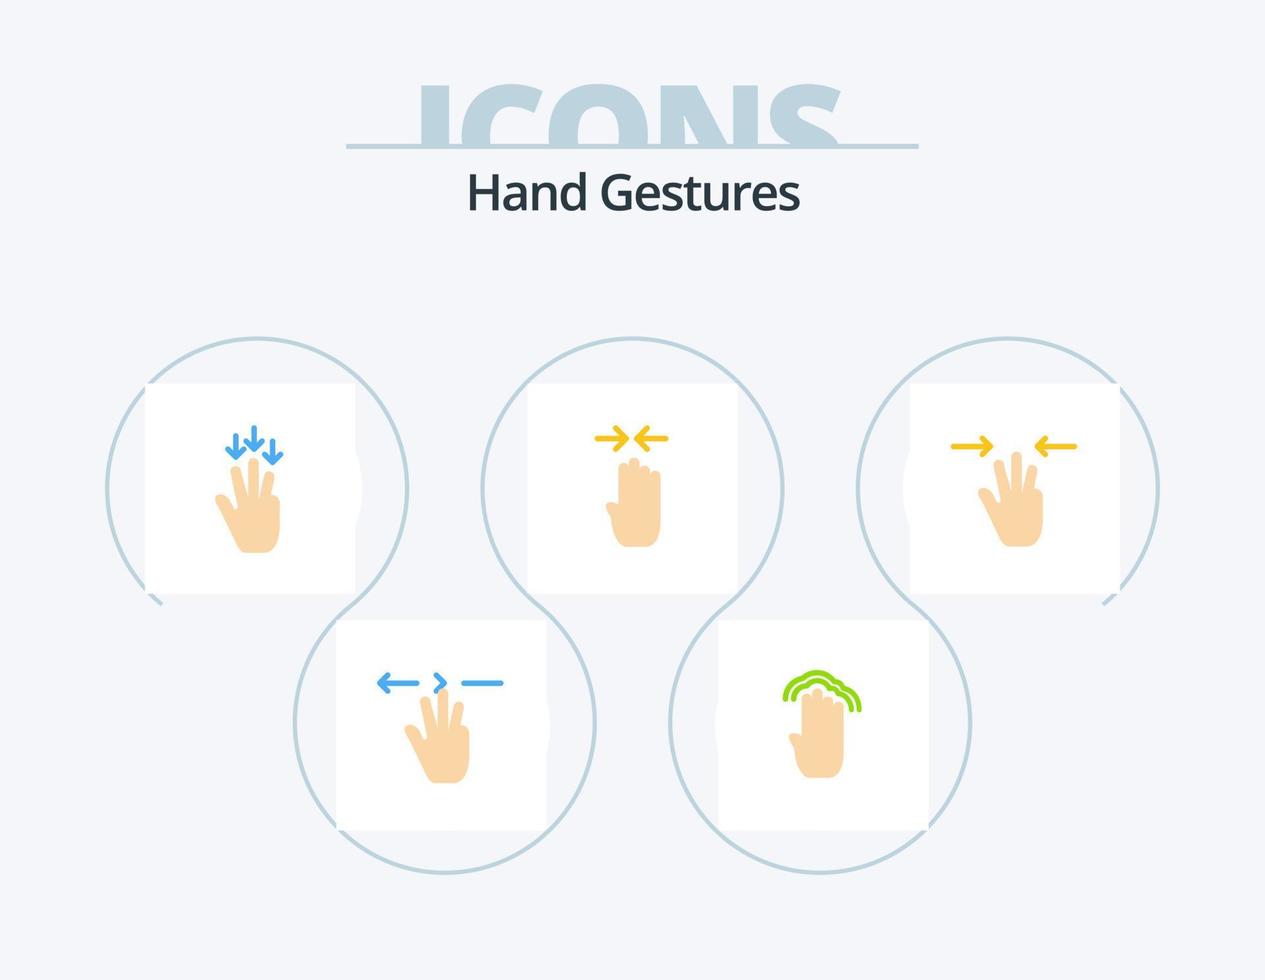 gestes de la main pack d'icônes plates 5 conception d'icônes. . interface. gestes. gestes. des doigts vecteur